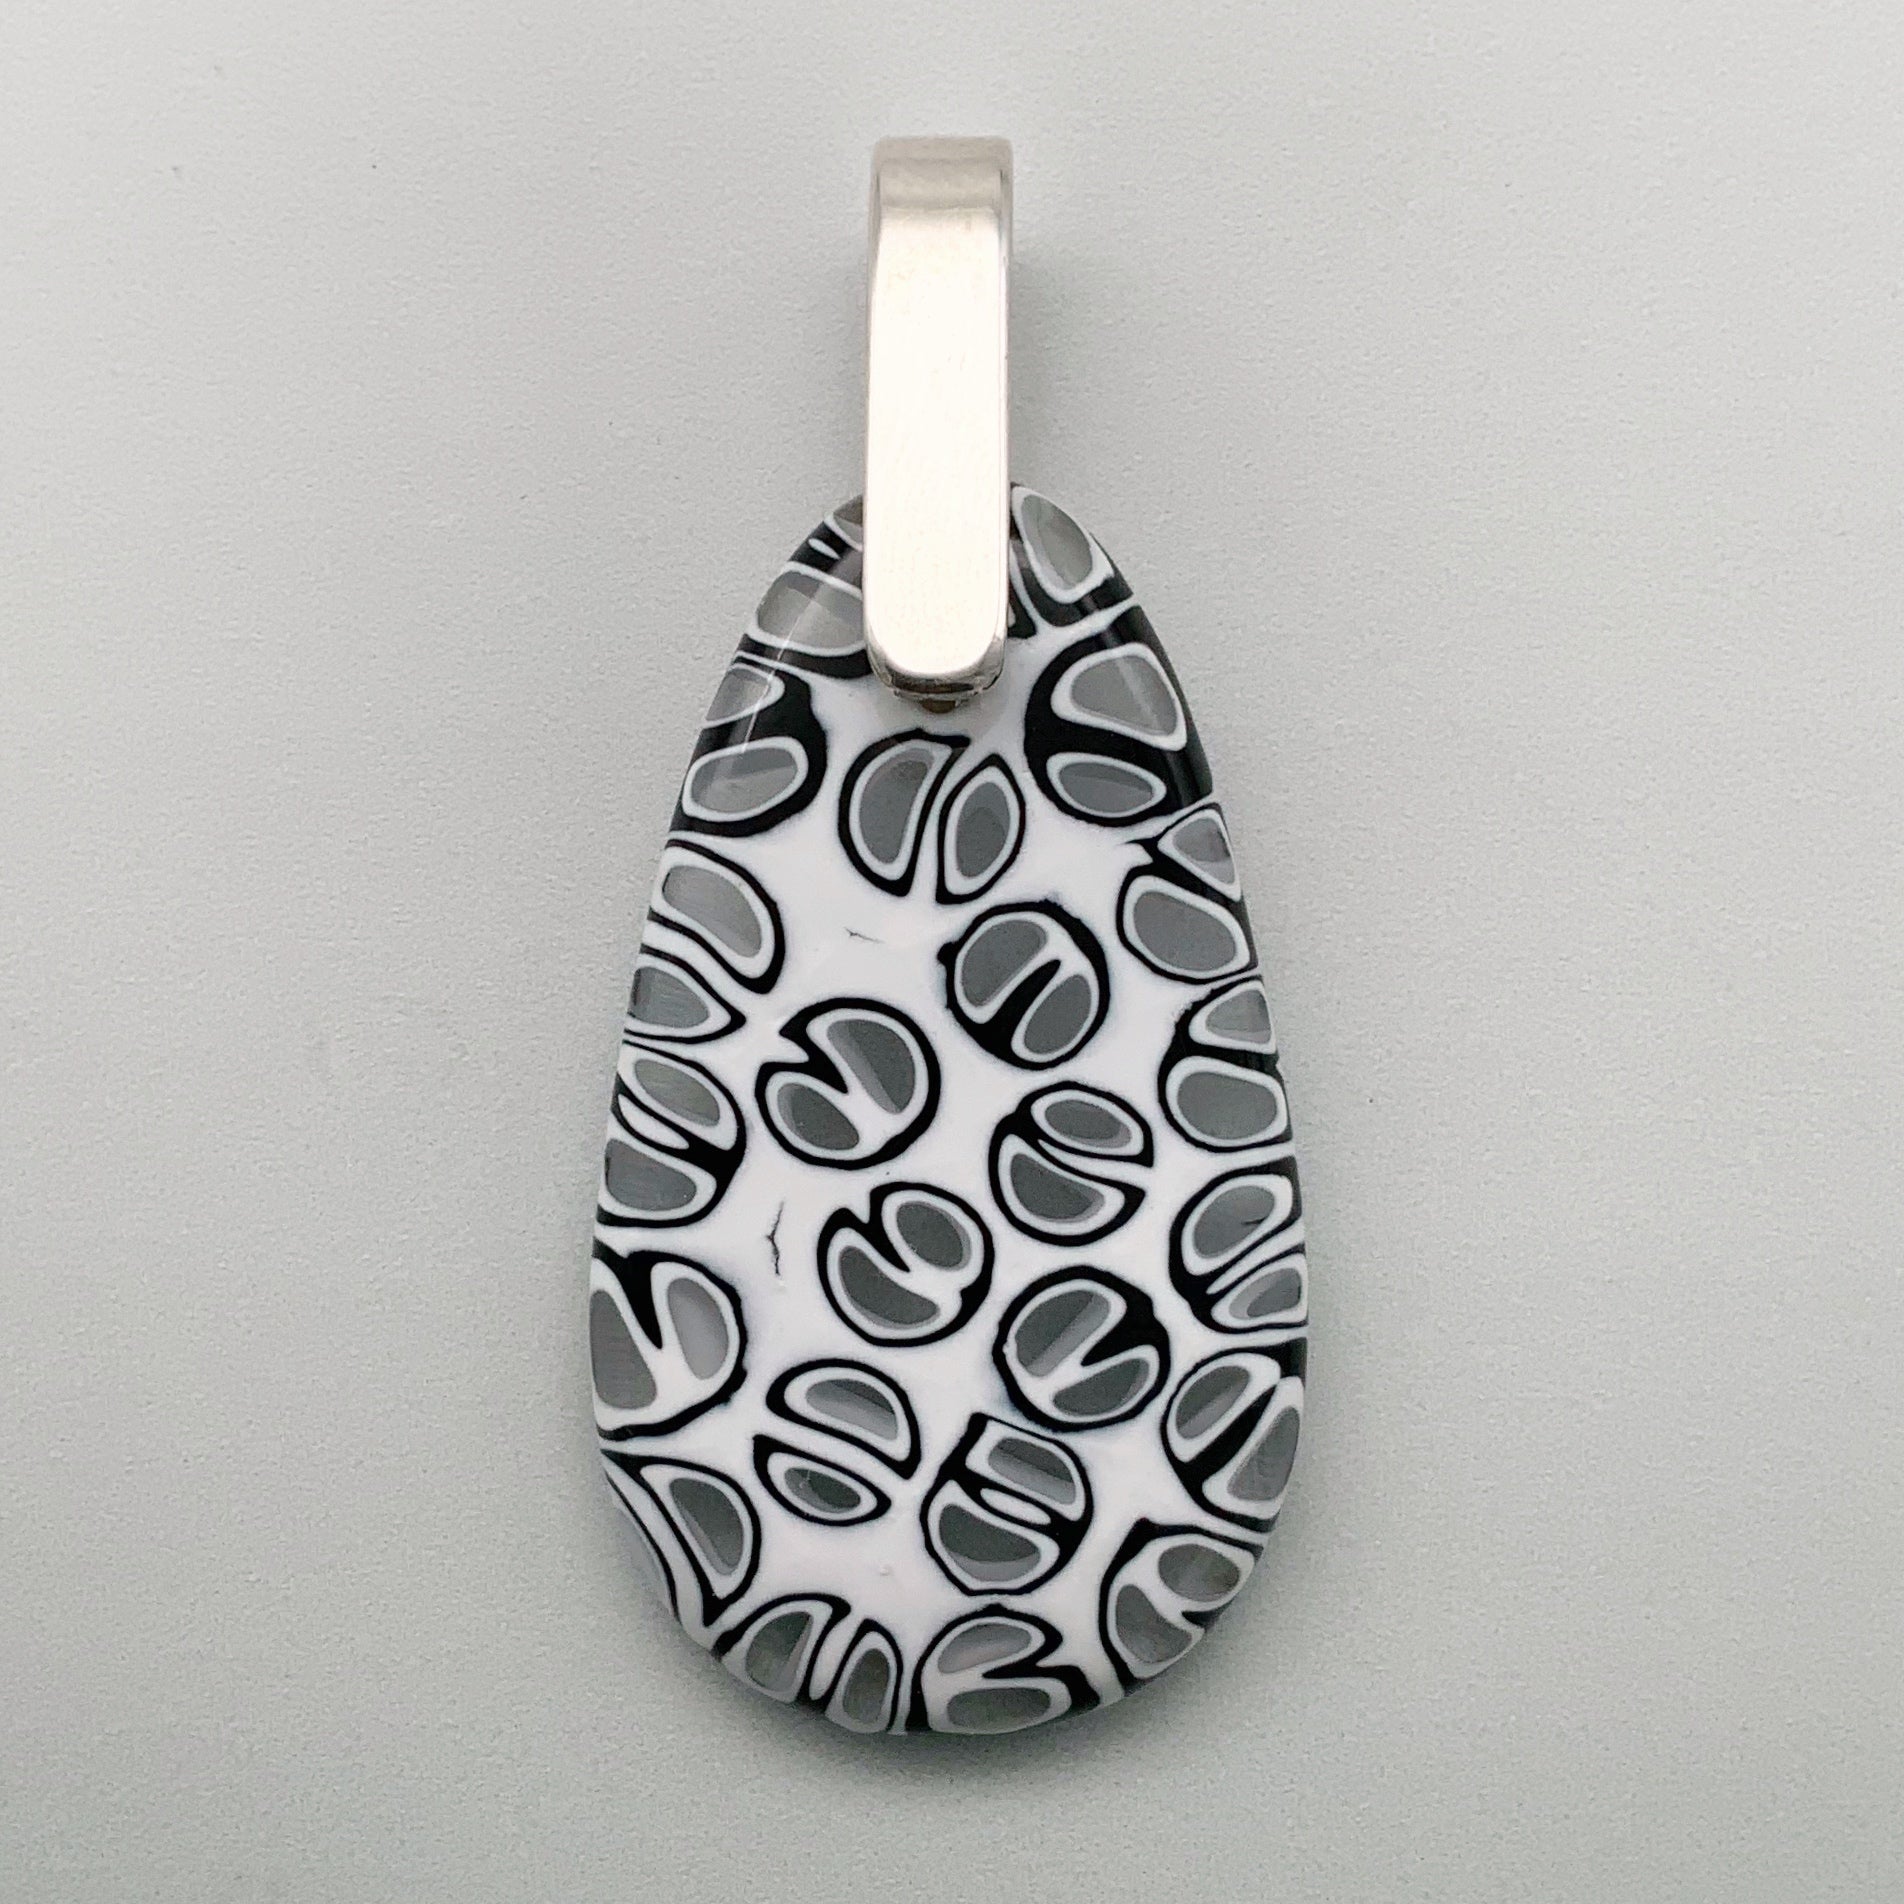 Murrini black and white glass drop pendant